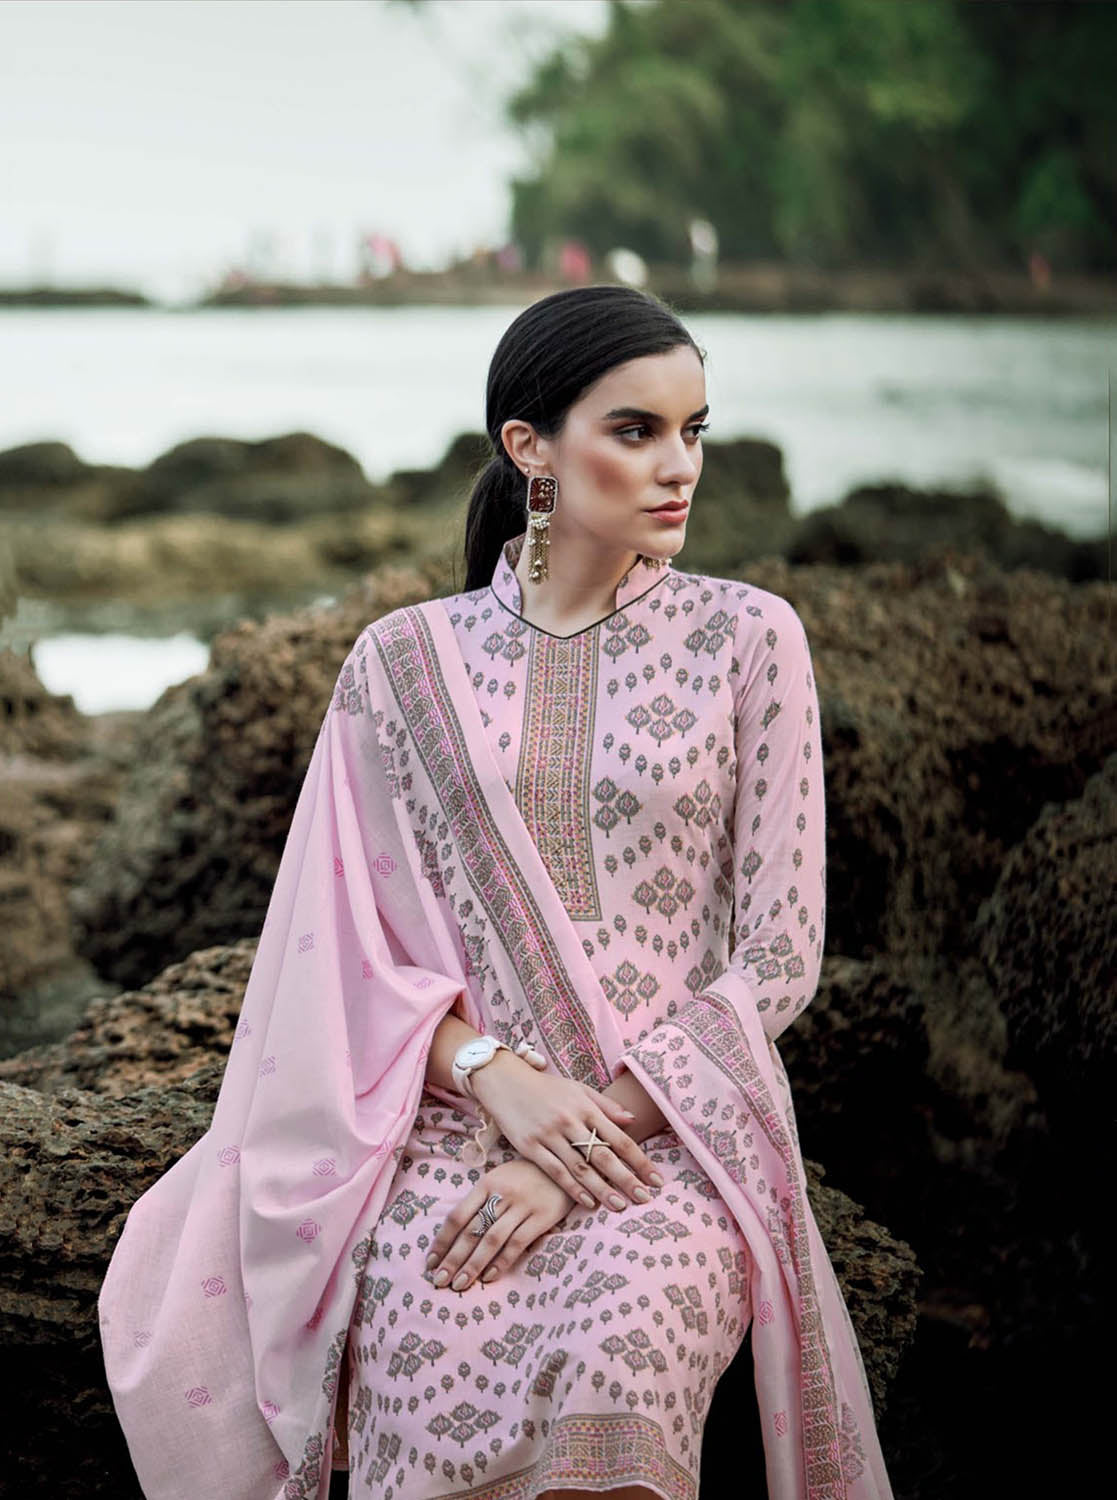 Sargam Unstitched Pink Cotton Suits Dress Materials for Women